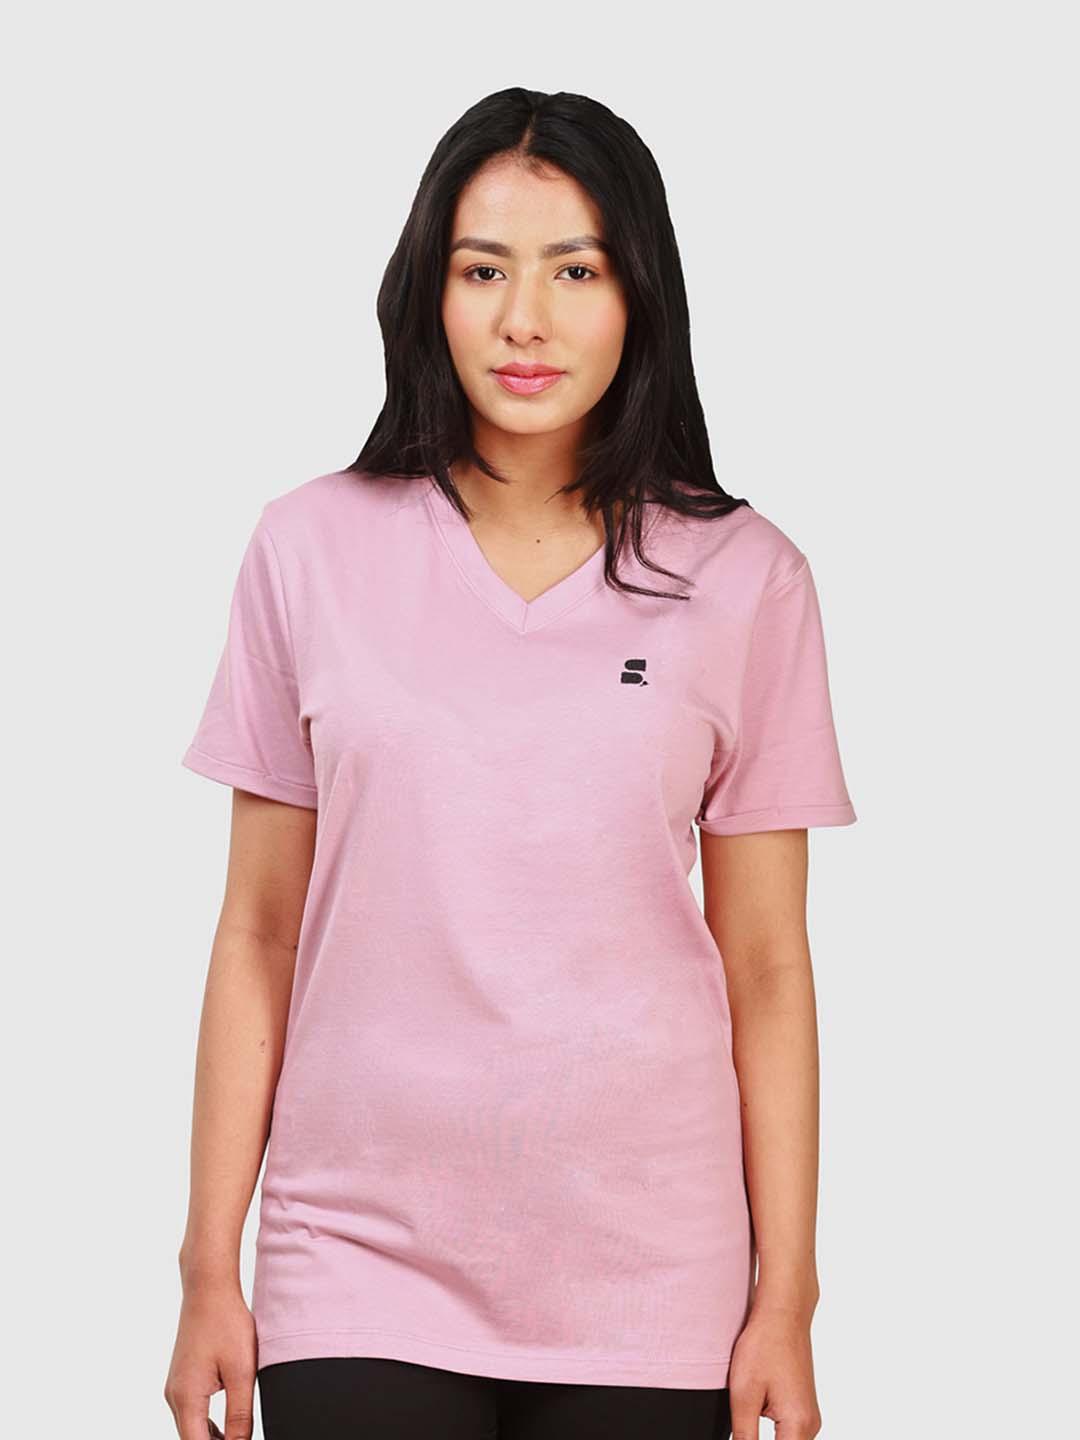 sumiso v-neck short sleeves cotton t-shirt